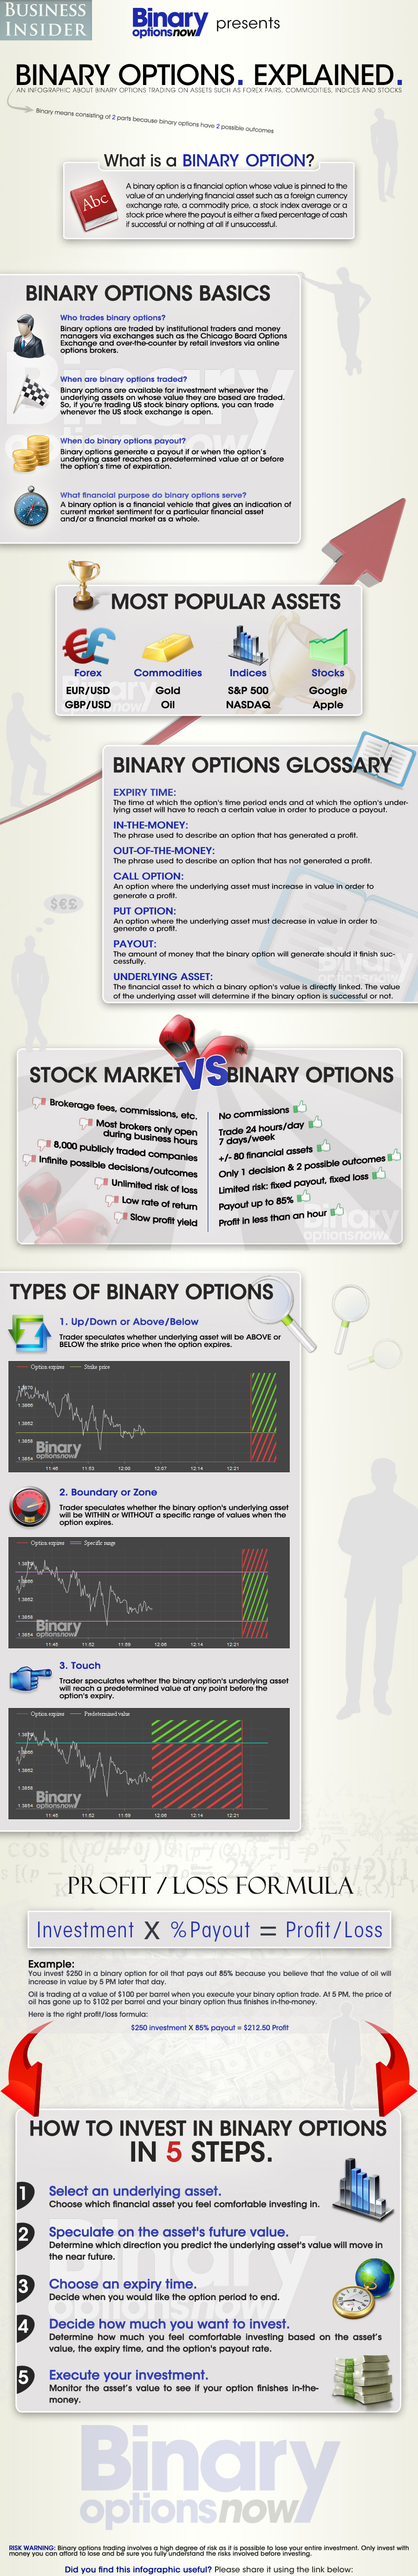 Binary options trading explained